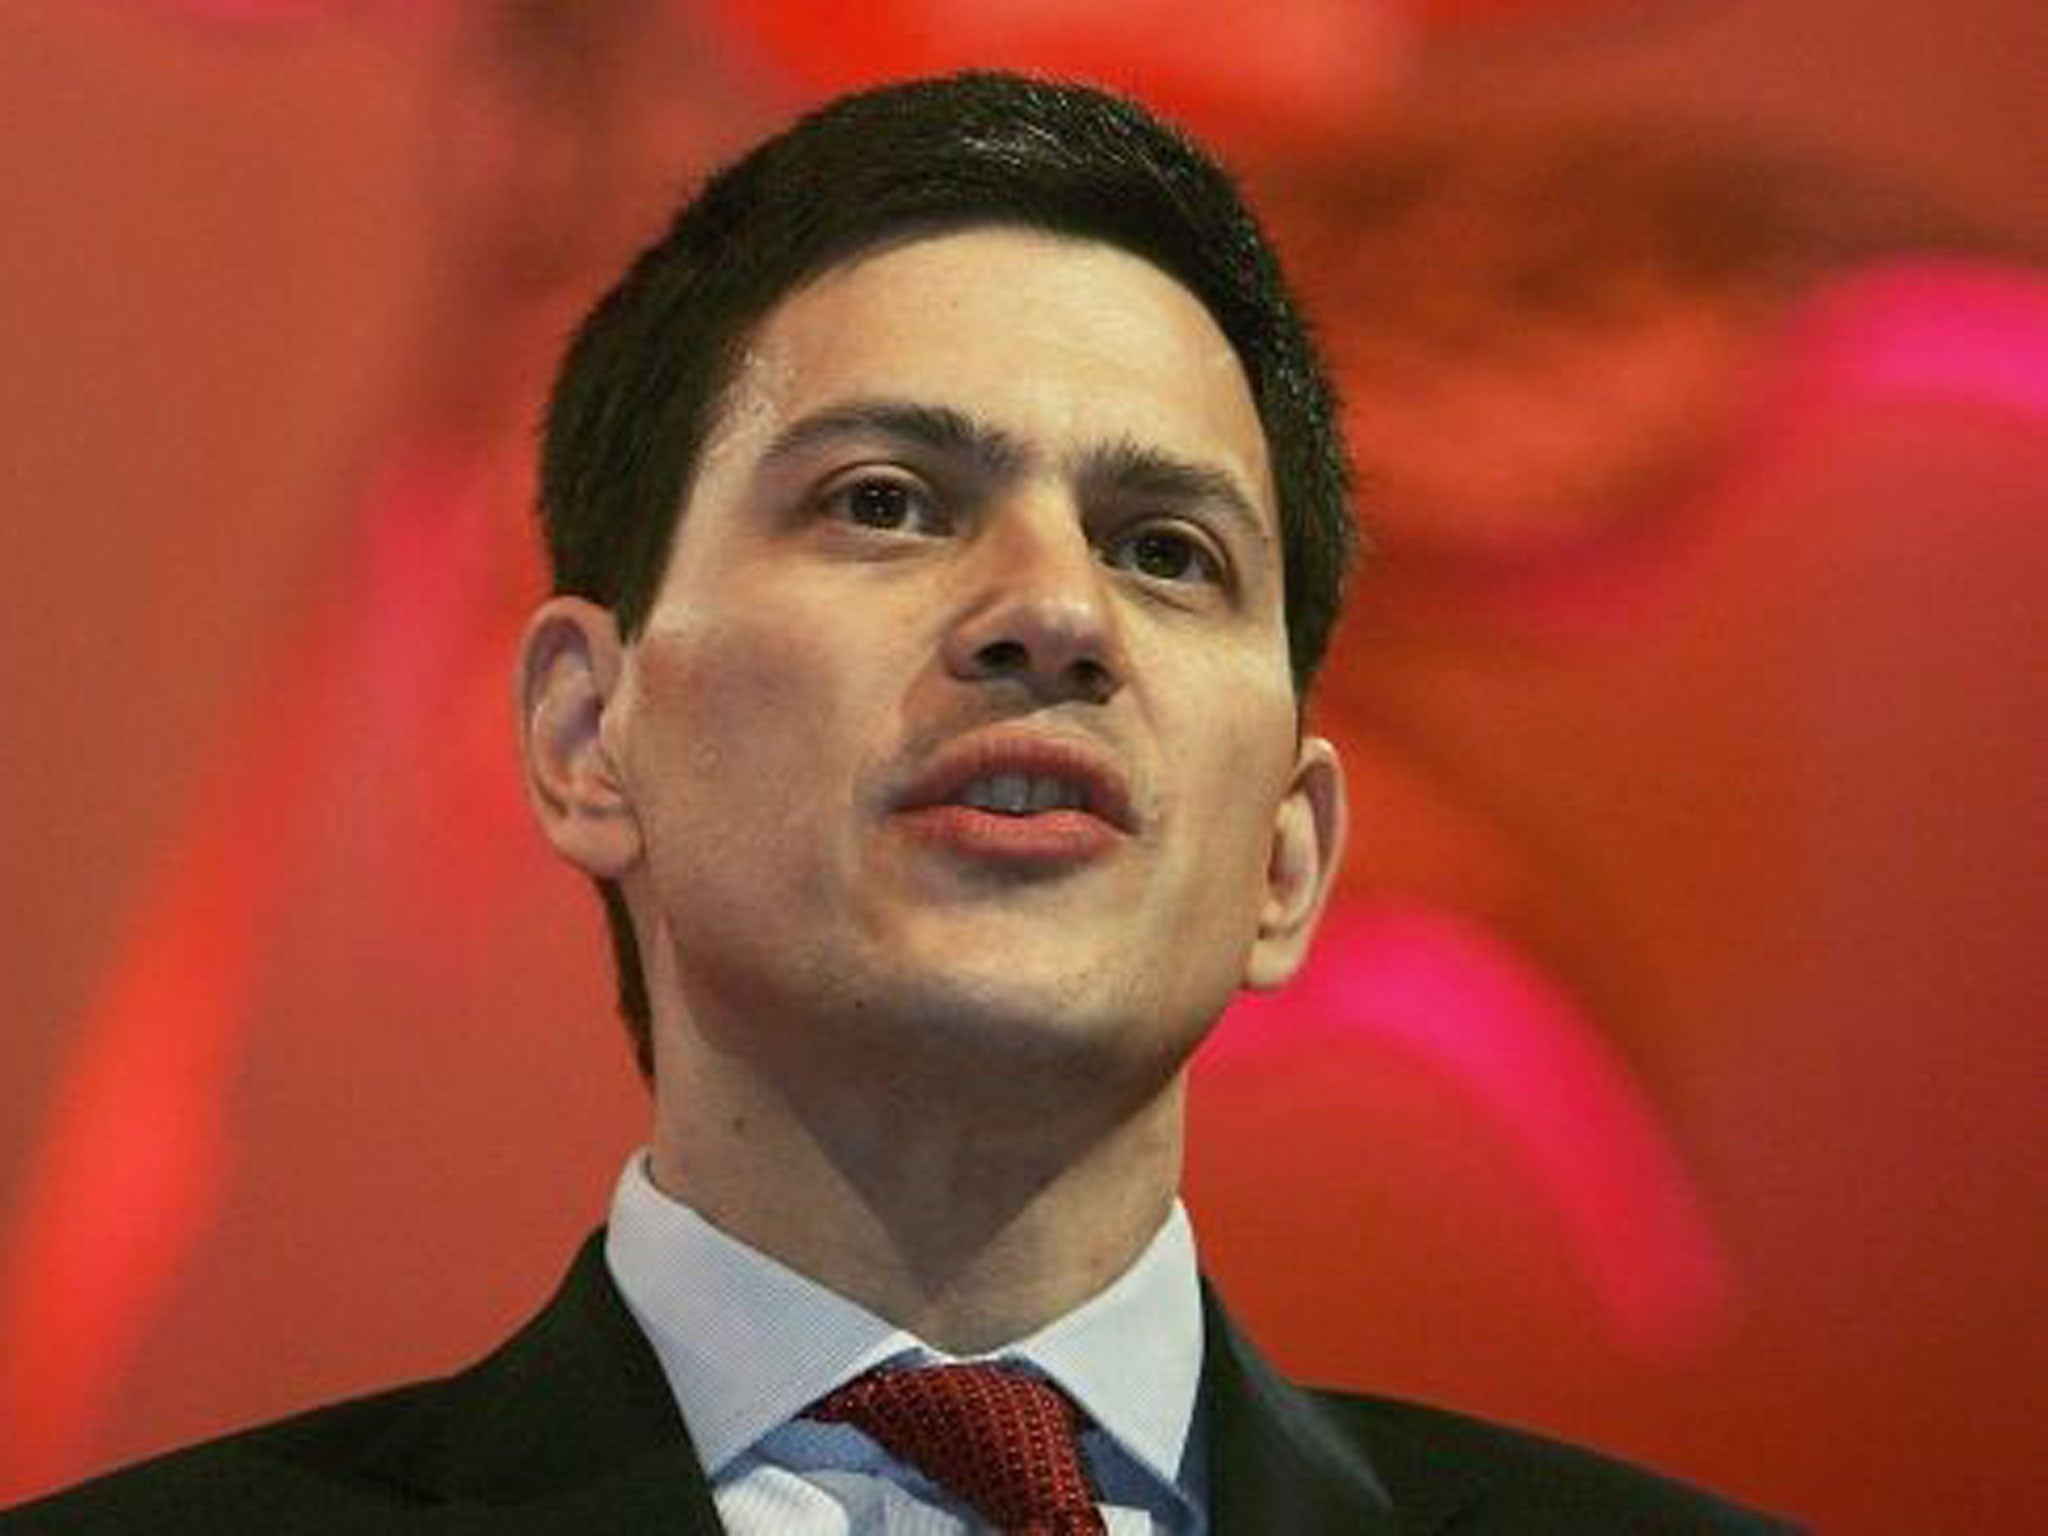 David Miliband cautioned against Britain leaving the European Union